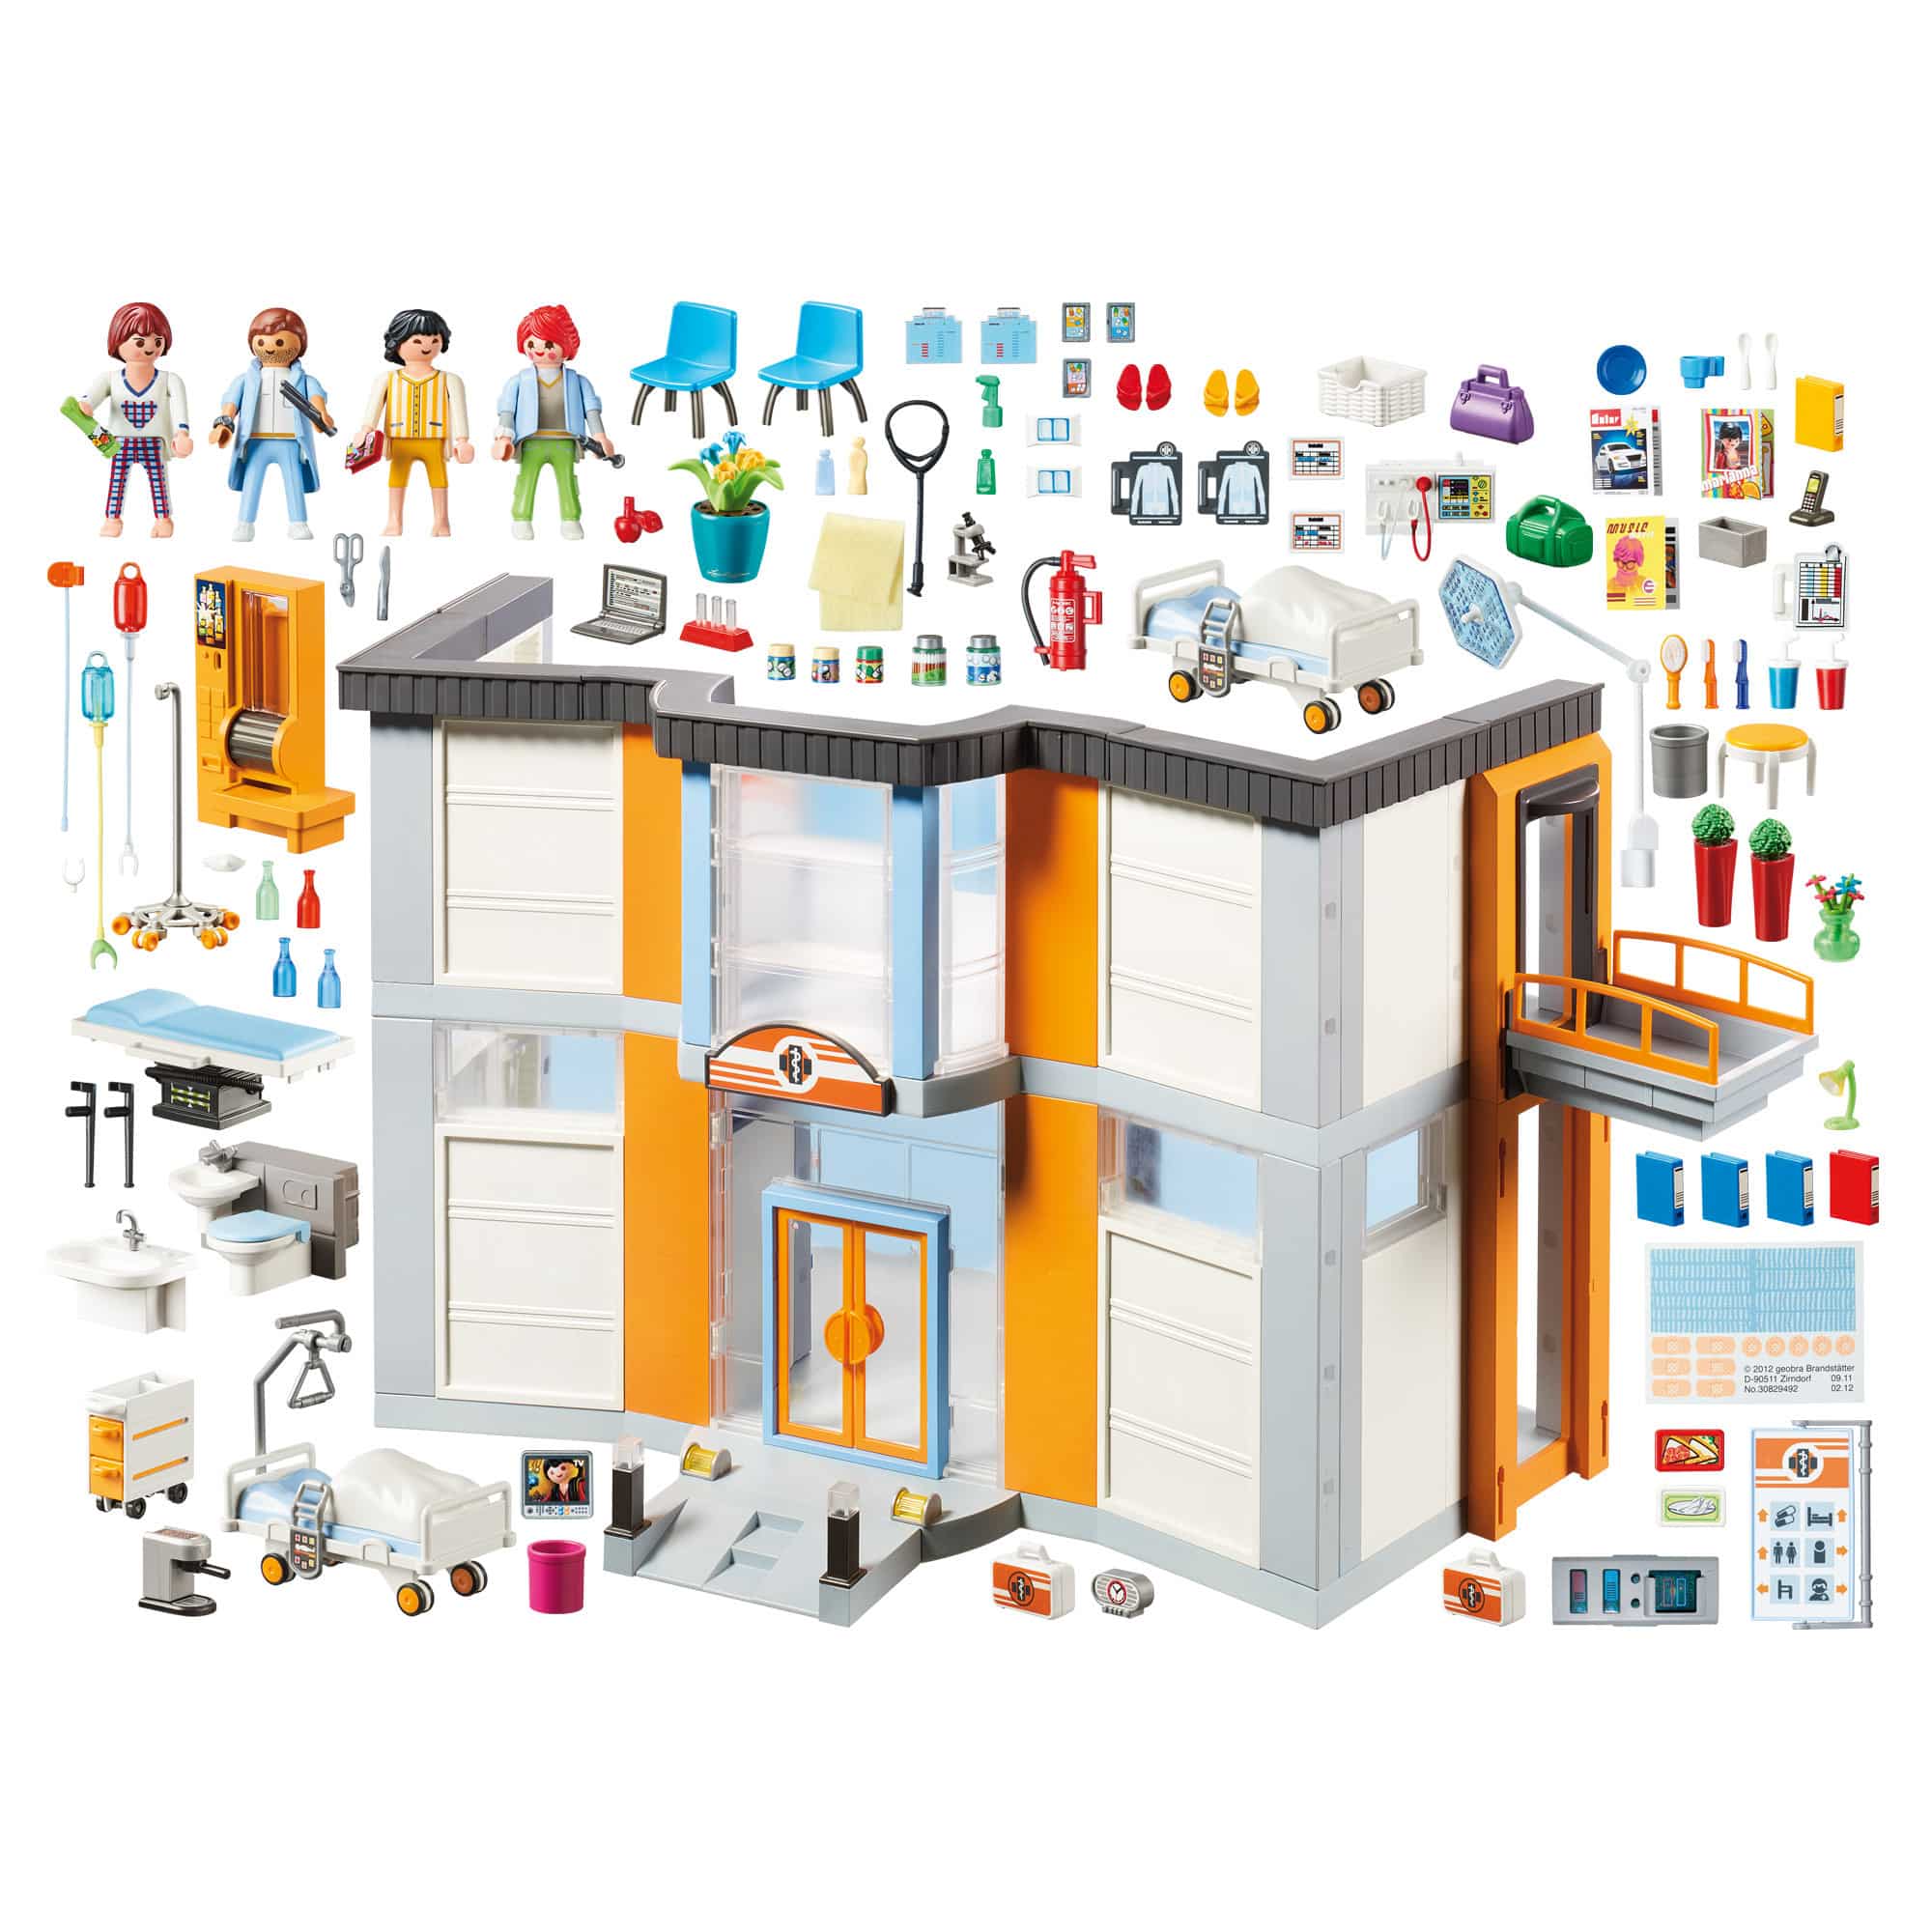 Playmobil - City Life - Large Hospital 70190